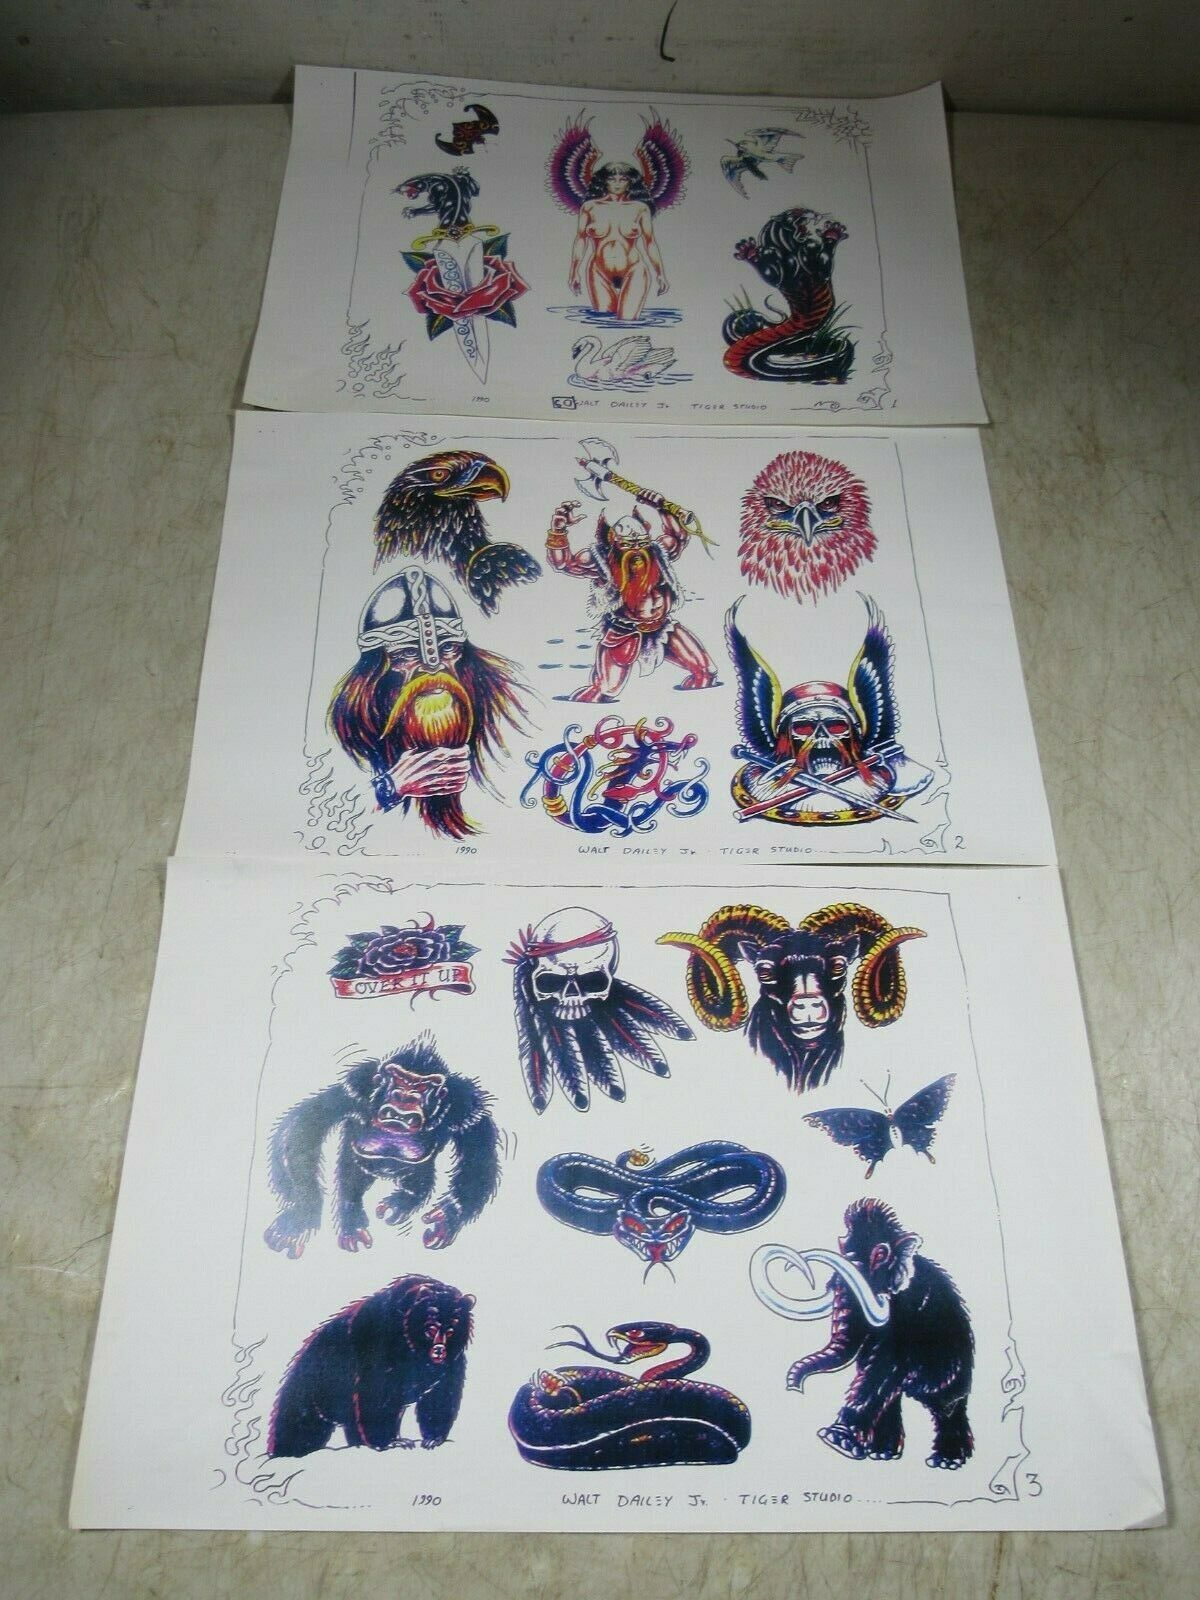 3 Vintage 1990 Walter Dailey Tiger Studio Tattoo Flash Art Sheets Color